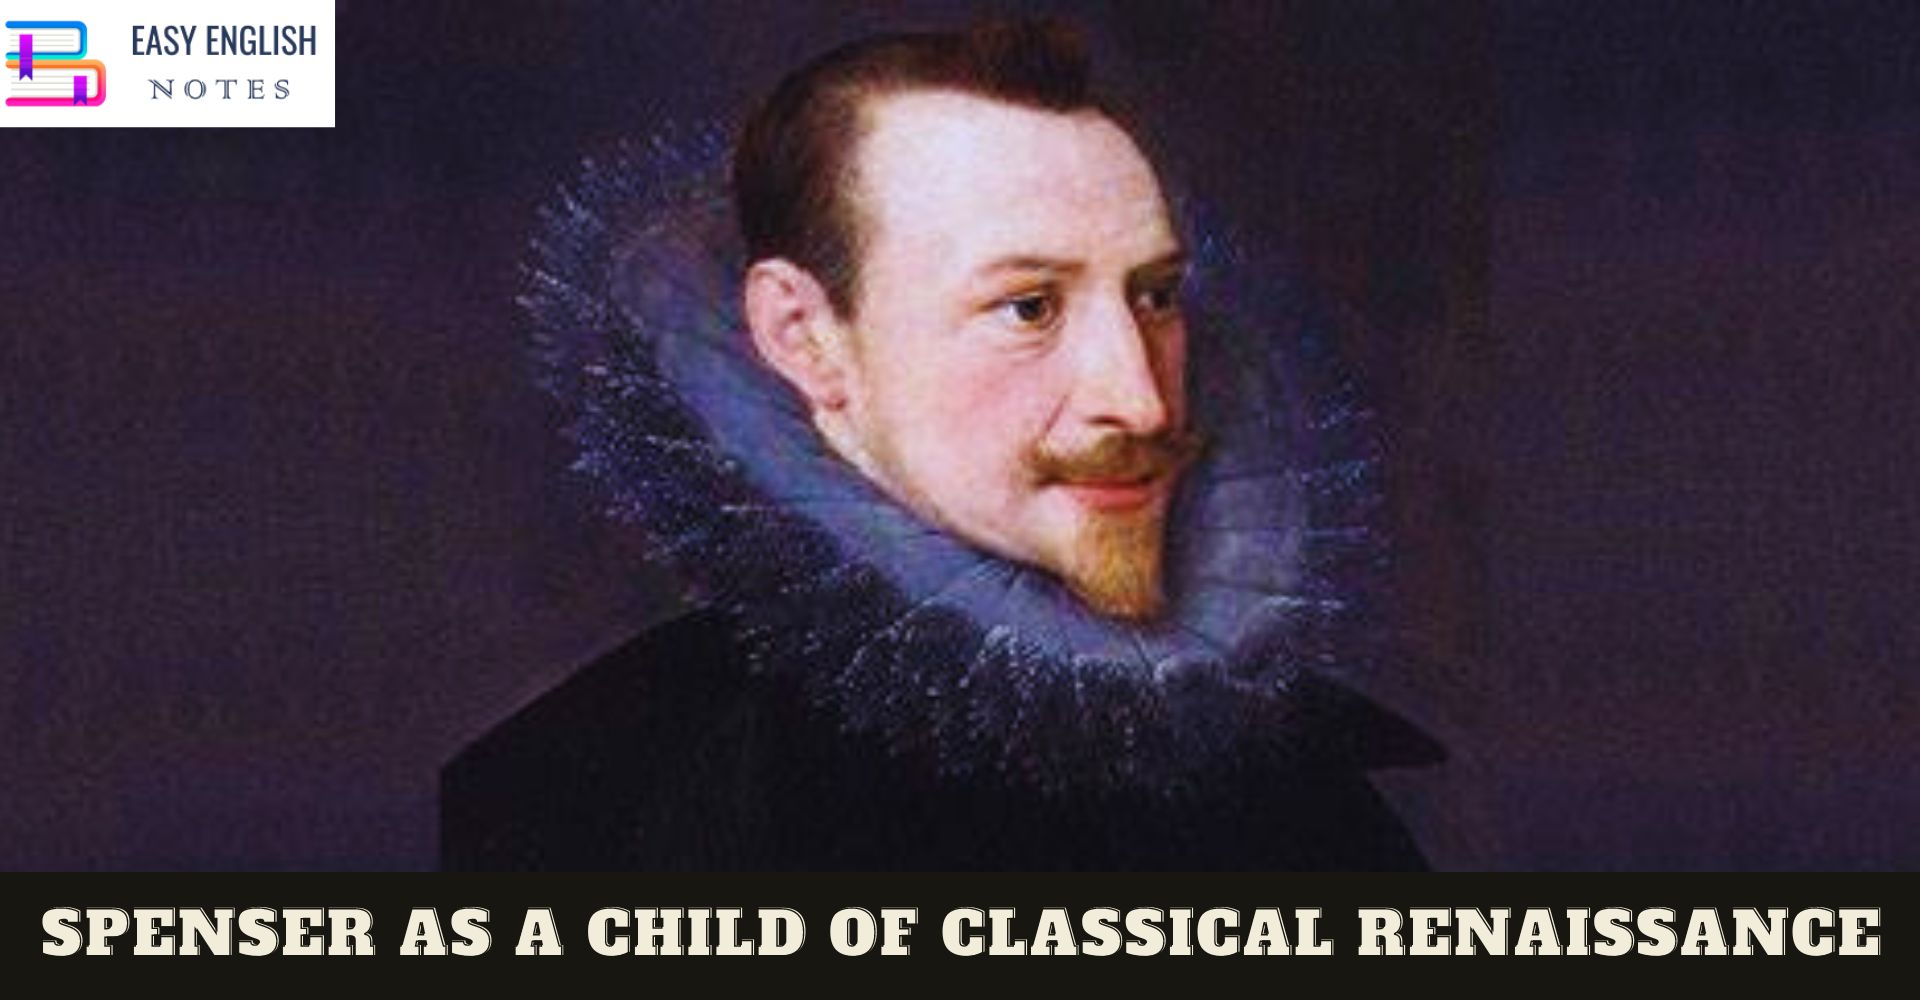 Spenser as a Child of Classical Renaissance